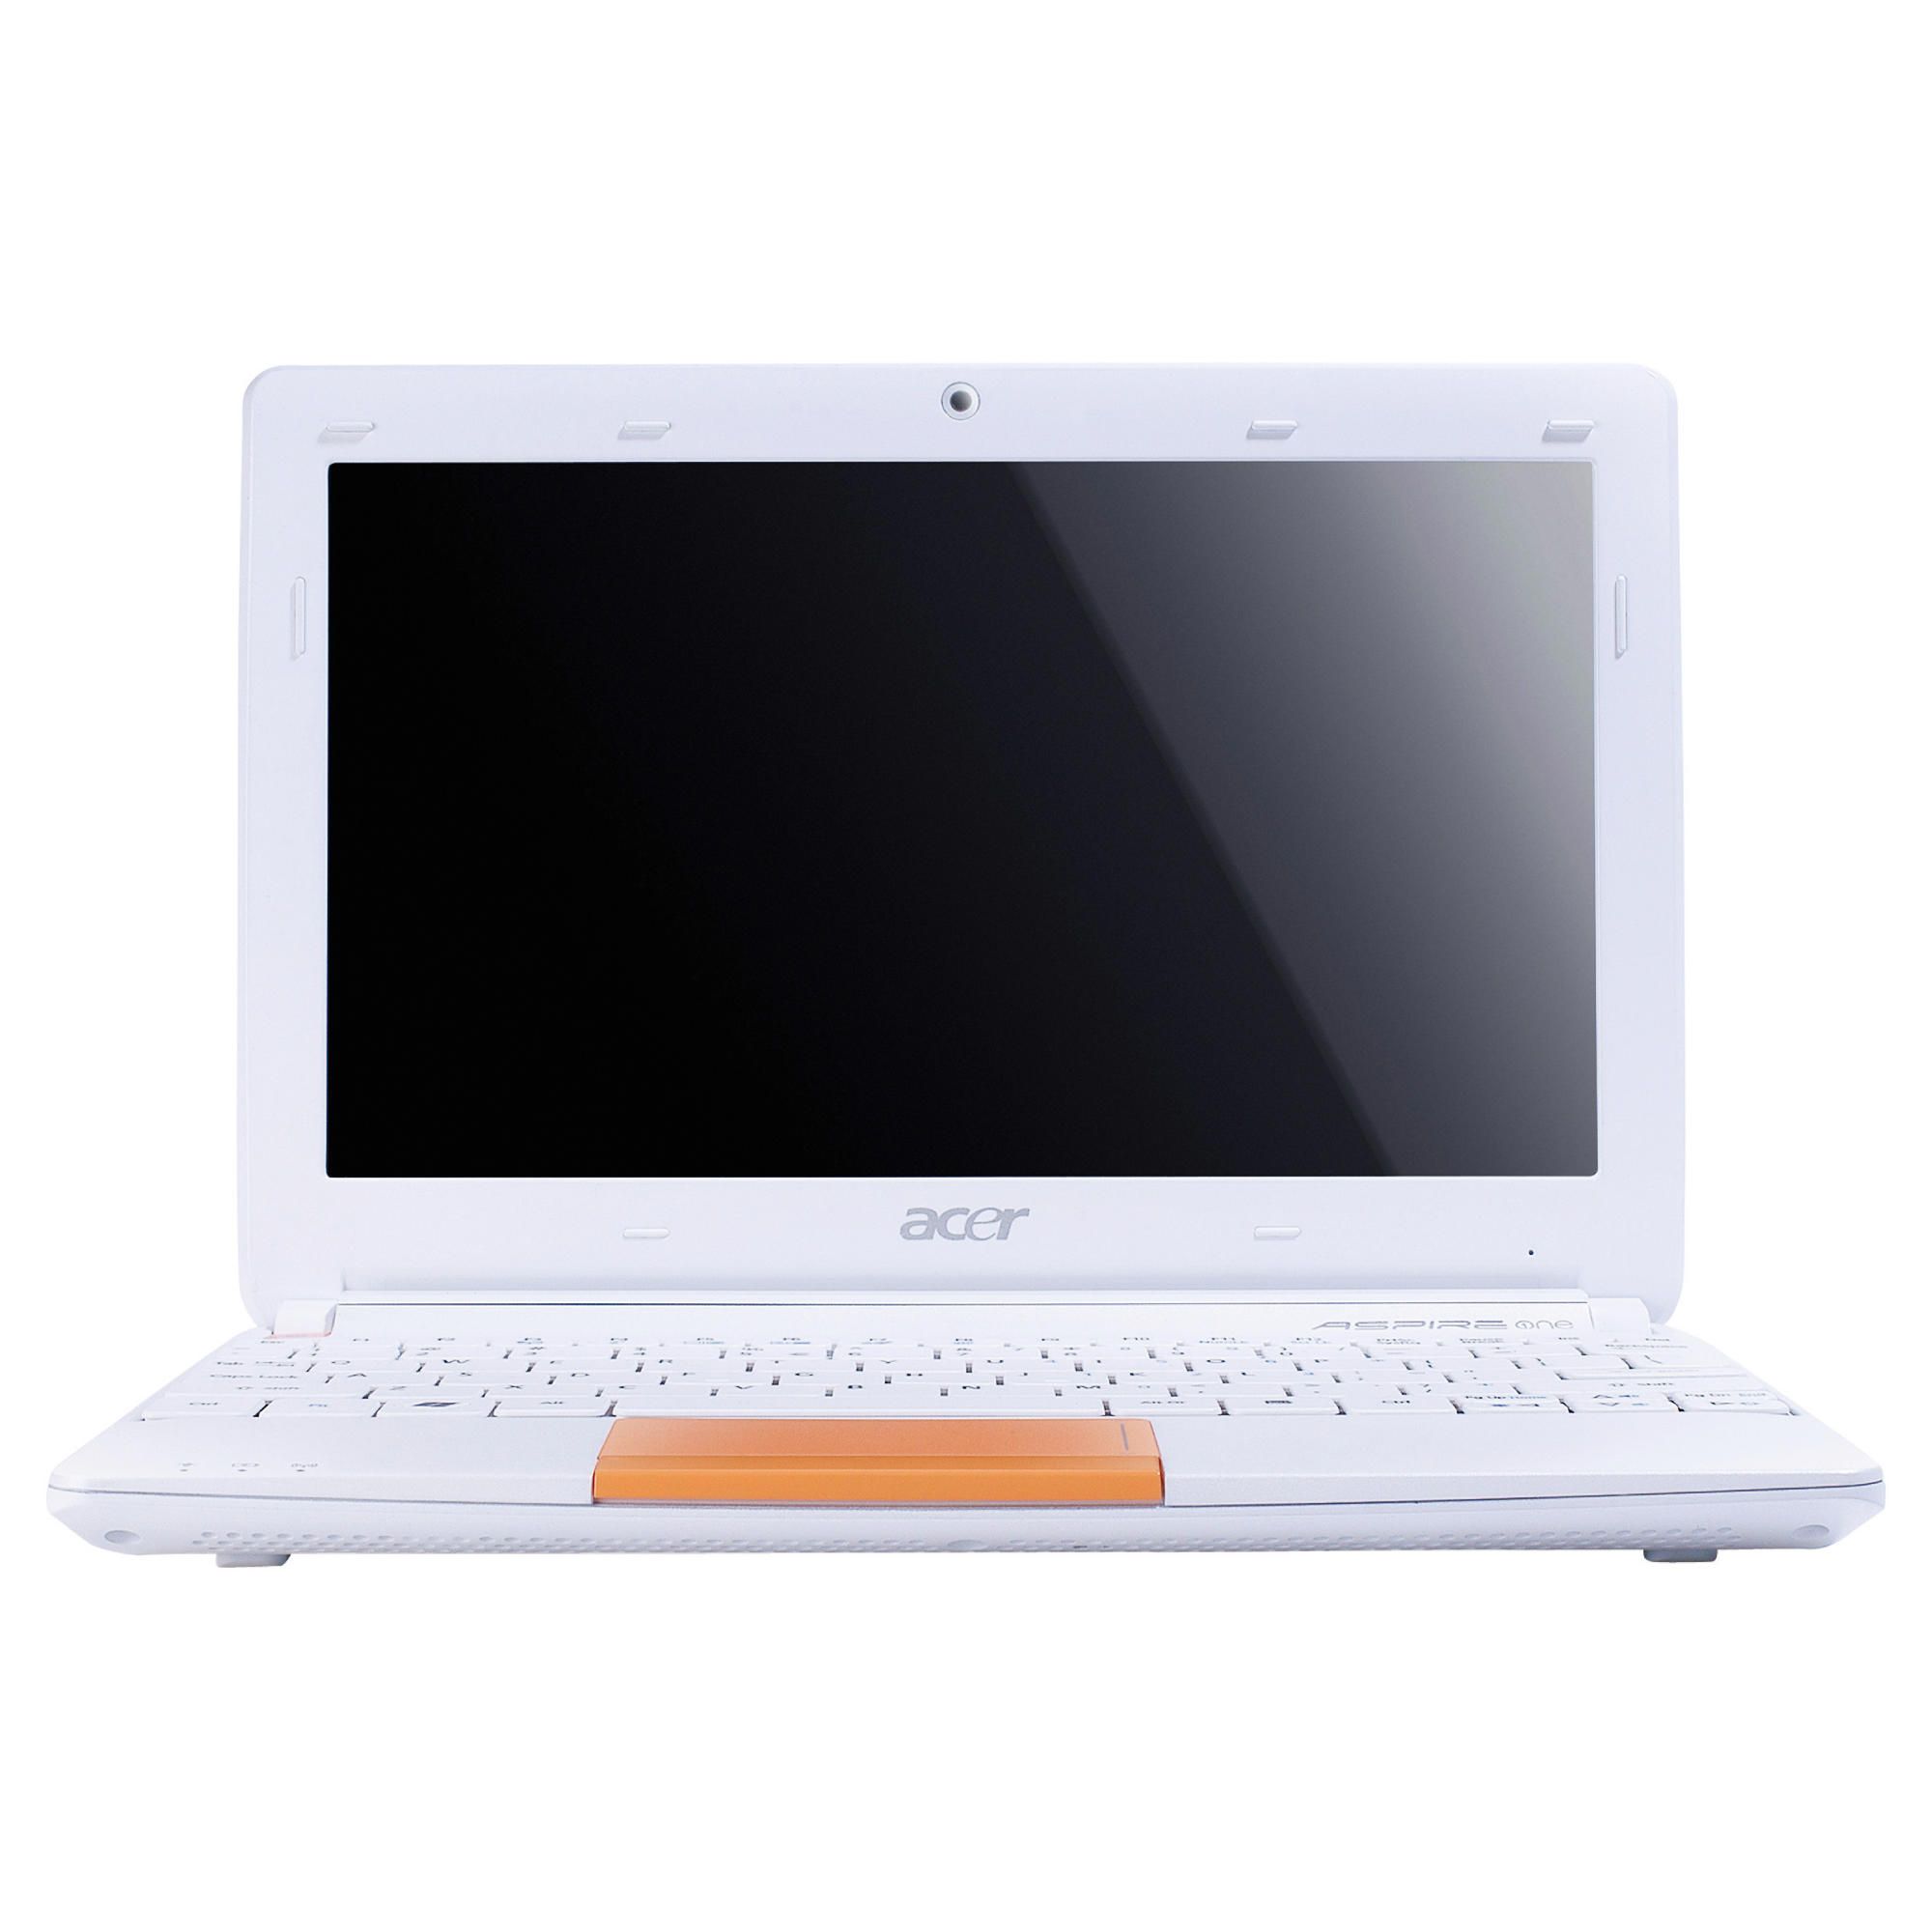 Acer Happy 2 Netbook (Intel Atom, 1GB, 1.5GHz, 250GB, 10.1'' Display) Orange at Tesco Direct